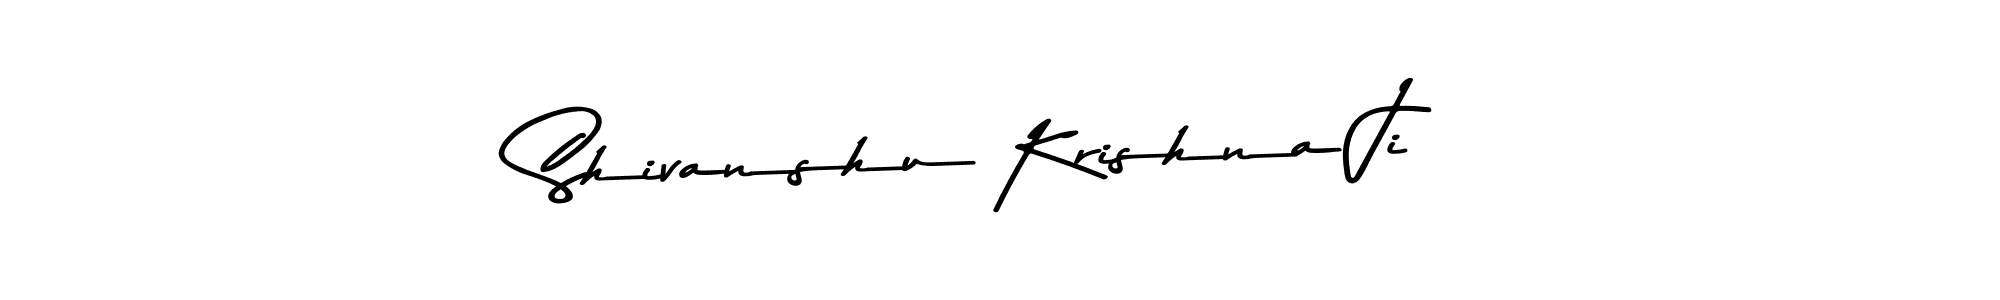 How to Draw Shivanshu Krishna Ji signature style? Asem Kandis PERSONAL USE is a latest design signature styles for name Shivanshu Krishna Ji. Shivanshu Krishna Ji signature style 9 images and pictures png